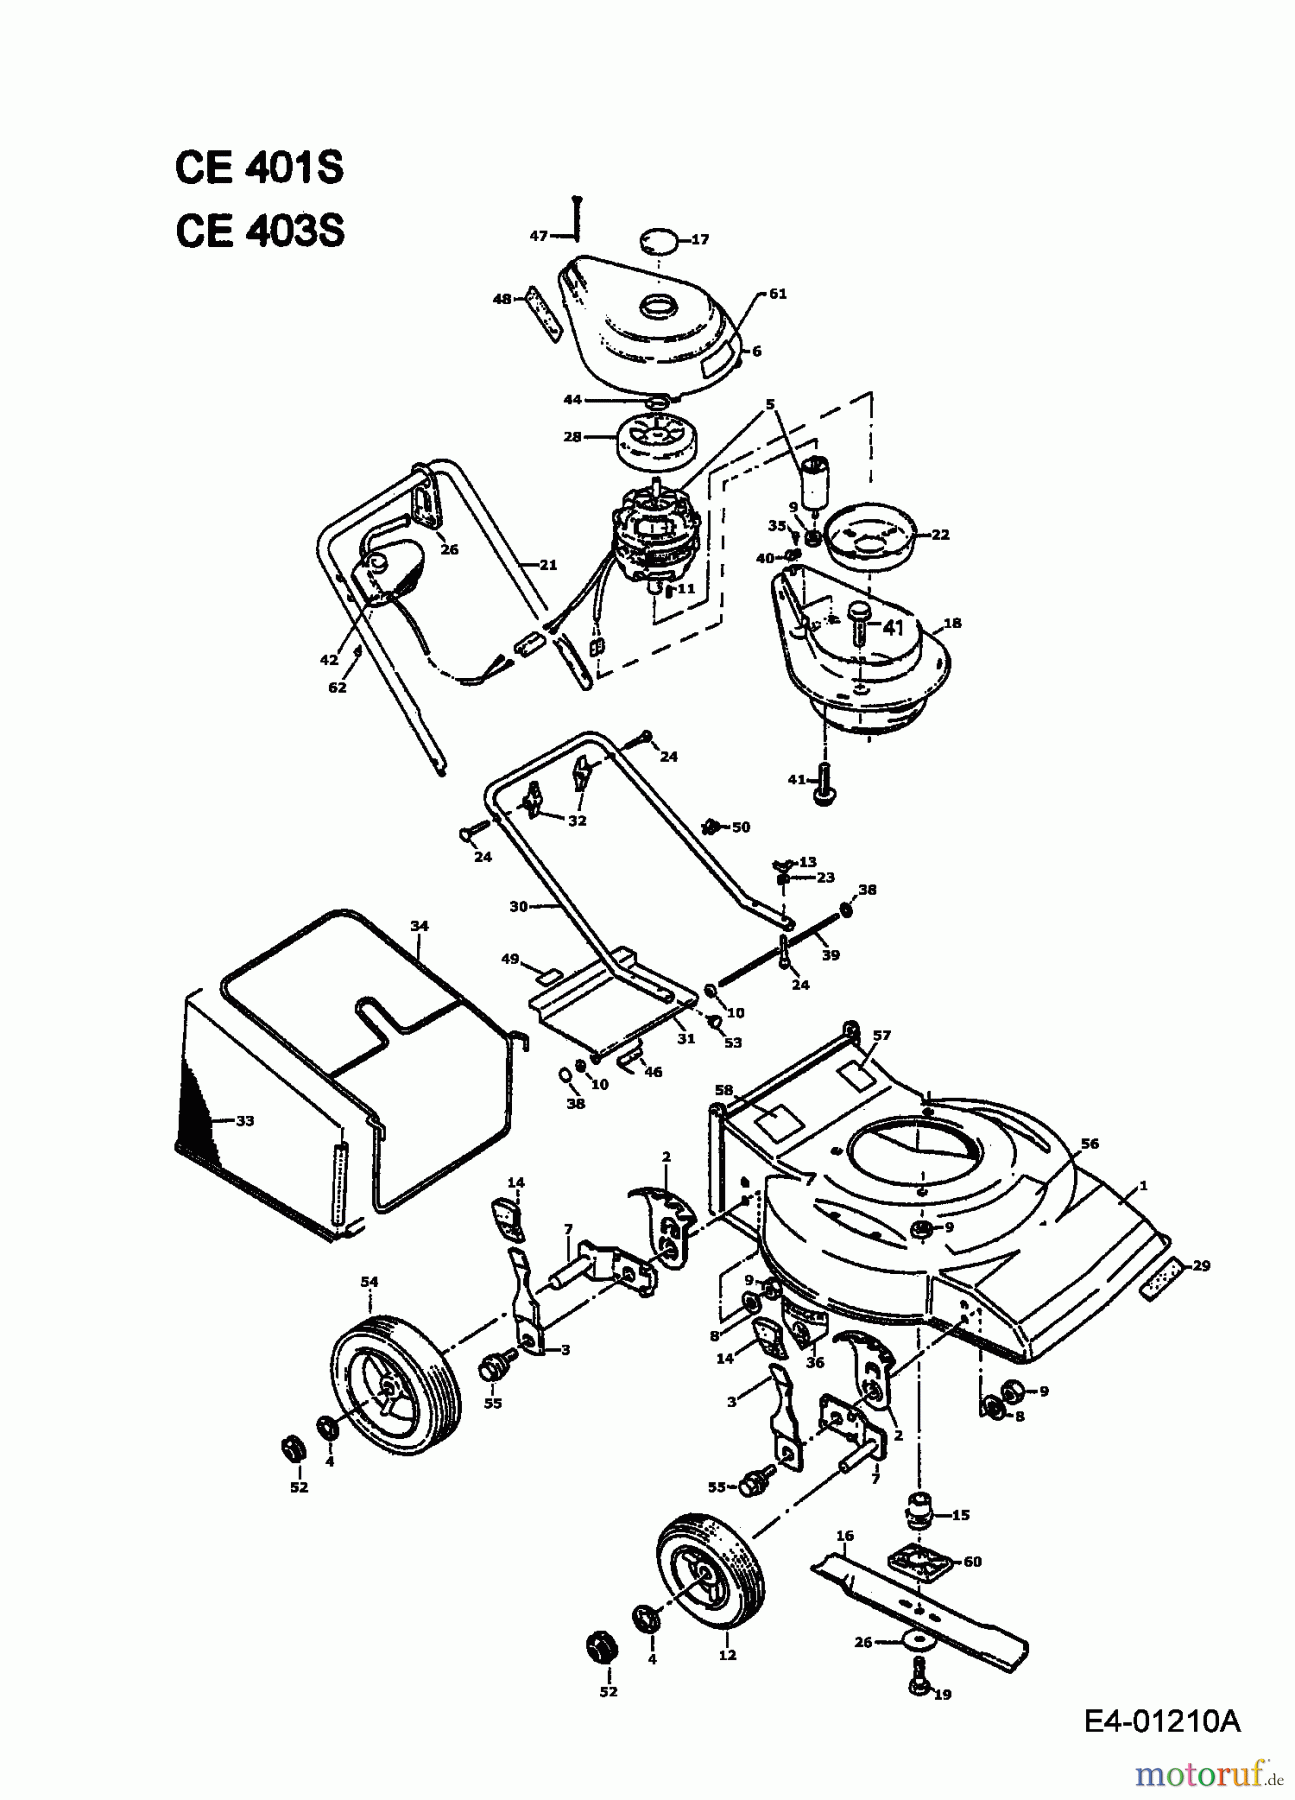  MTD Electric mower CE 403 S 901E404S001  (1994) Basic machine